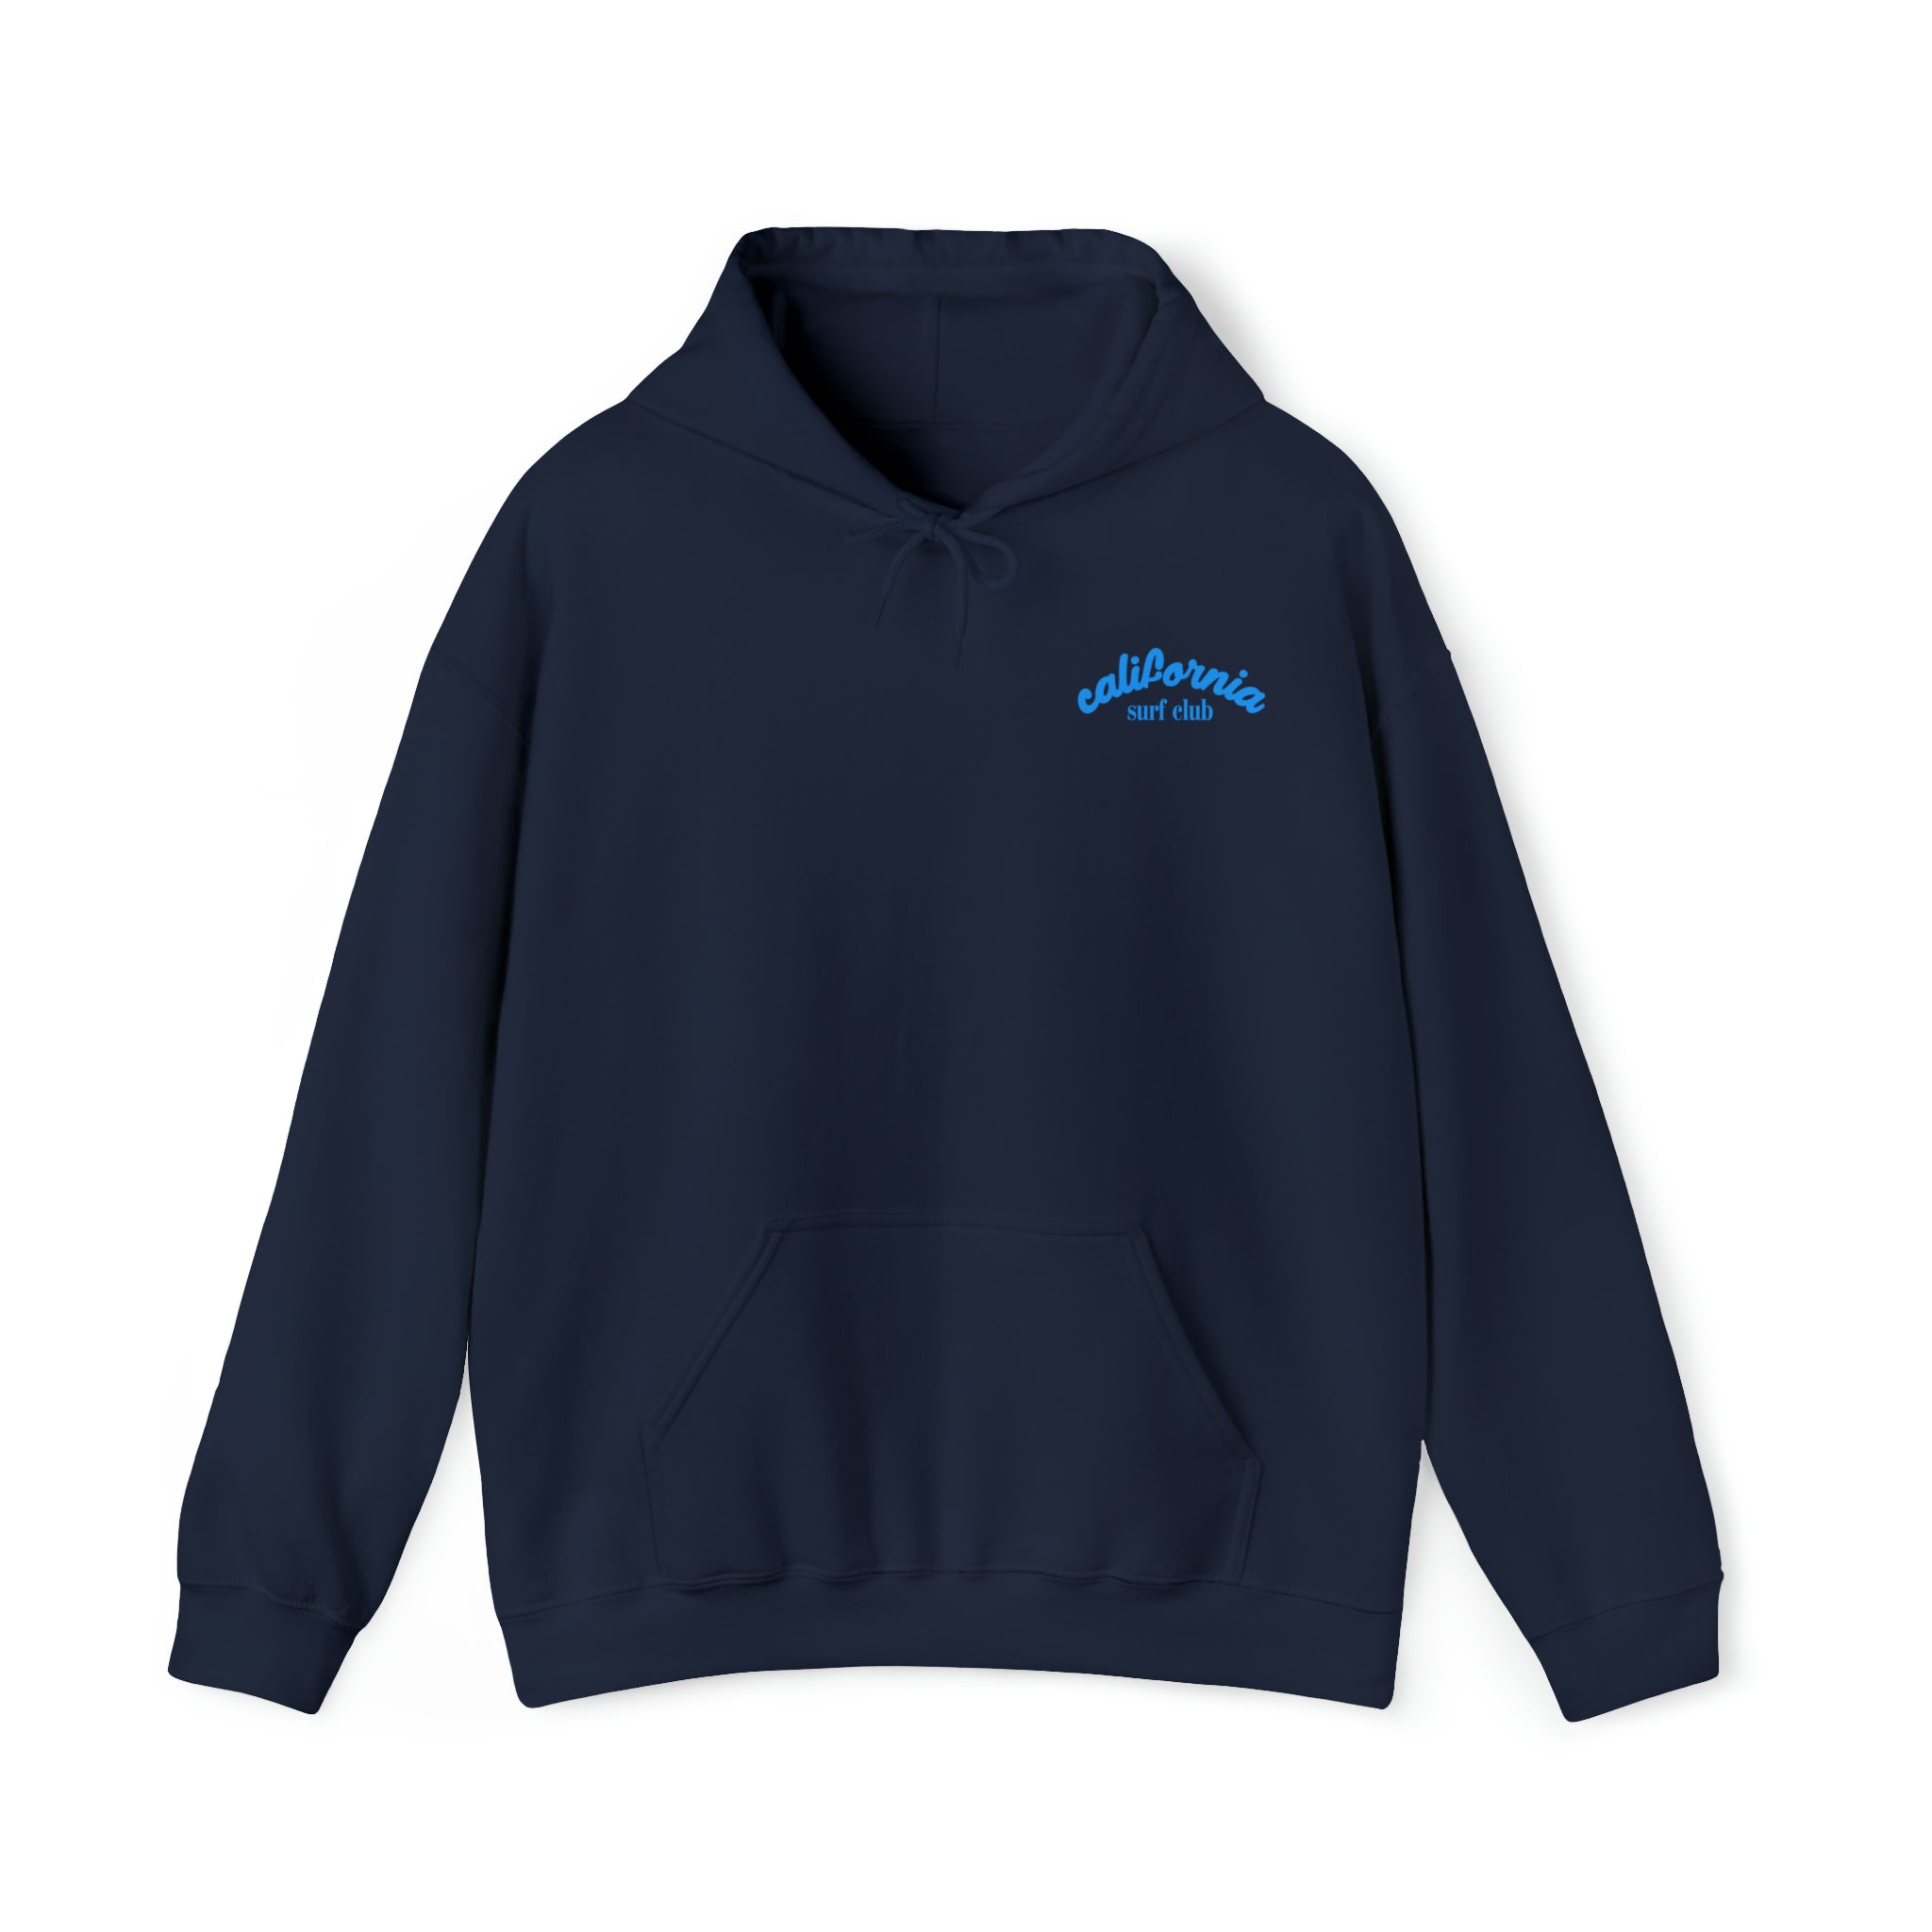 Get the Cali Surf Club Hoodie Sweatshirt from GS Print Shoppe